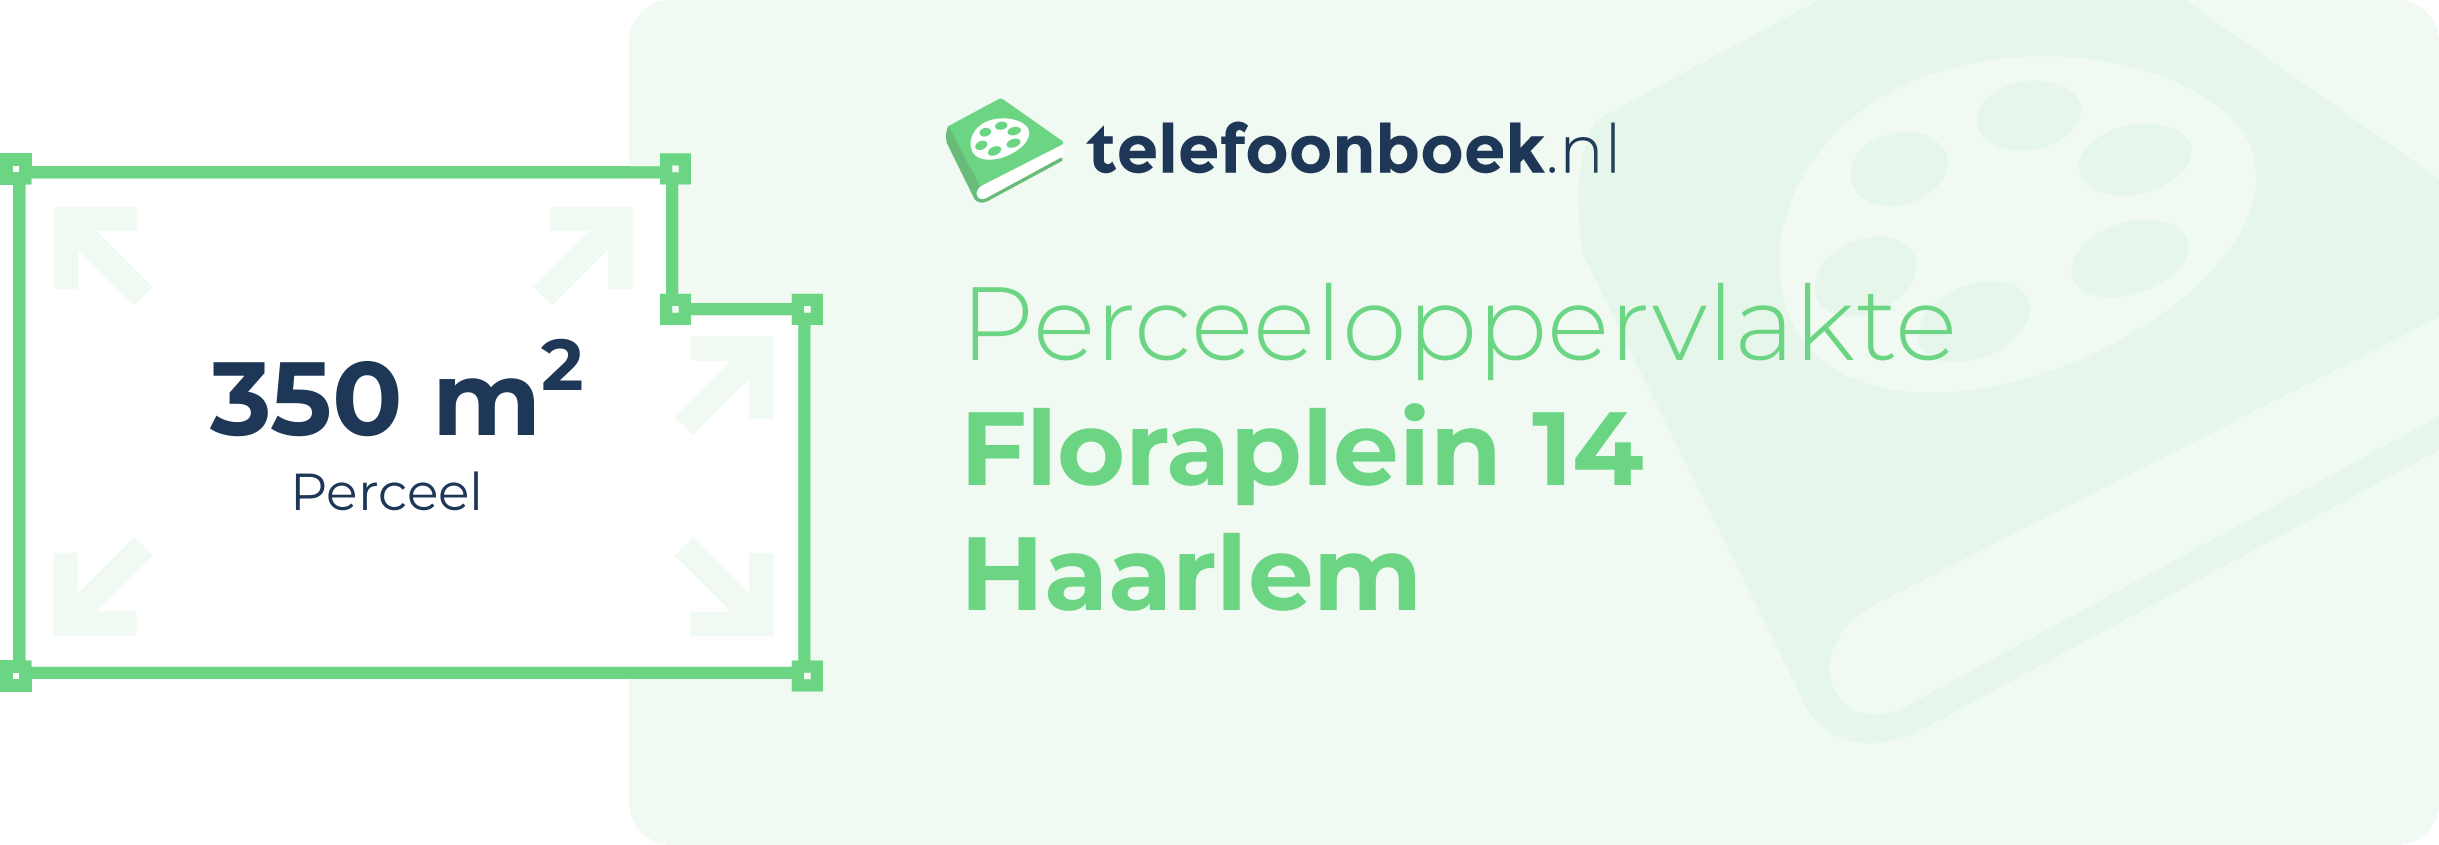 Perceeloppervlakte Floraplein 14 Haarlem